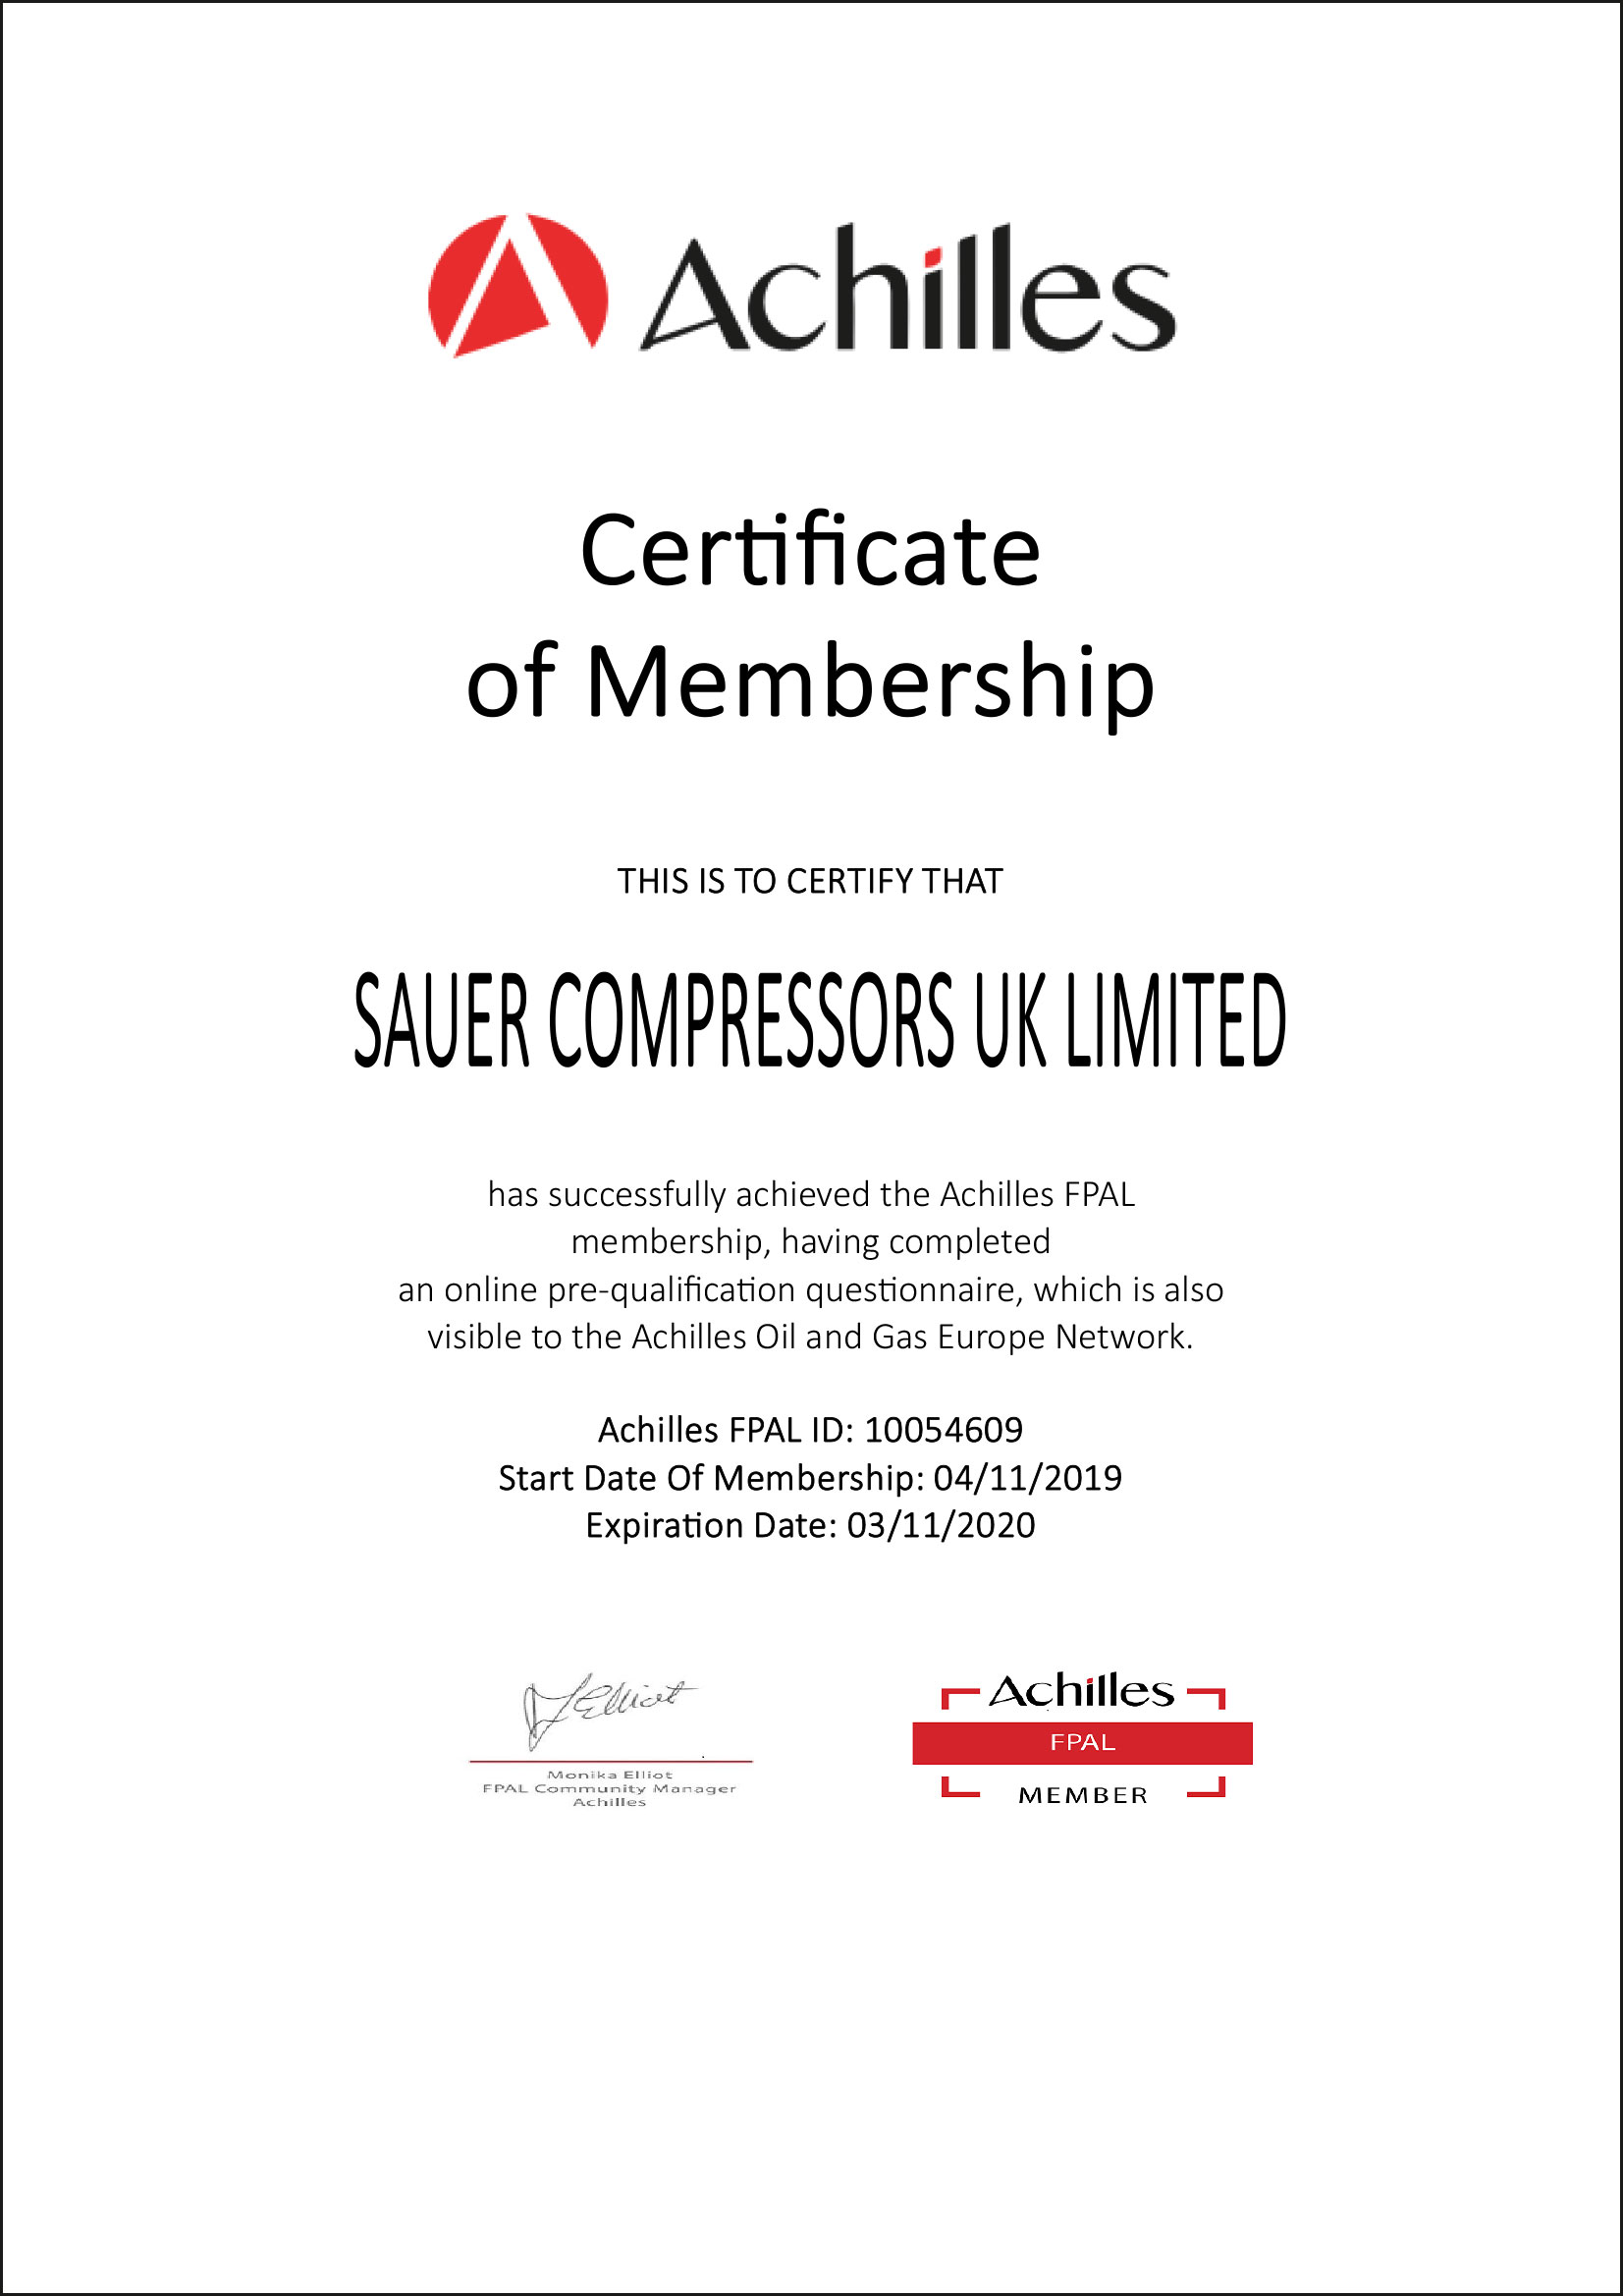 SC UK Achilles FPAL Certificate exp 04 11 2020